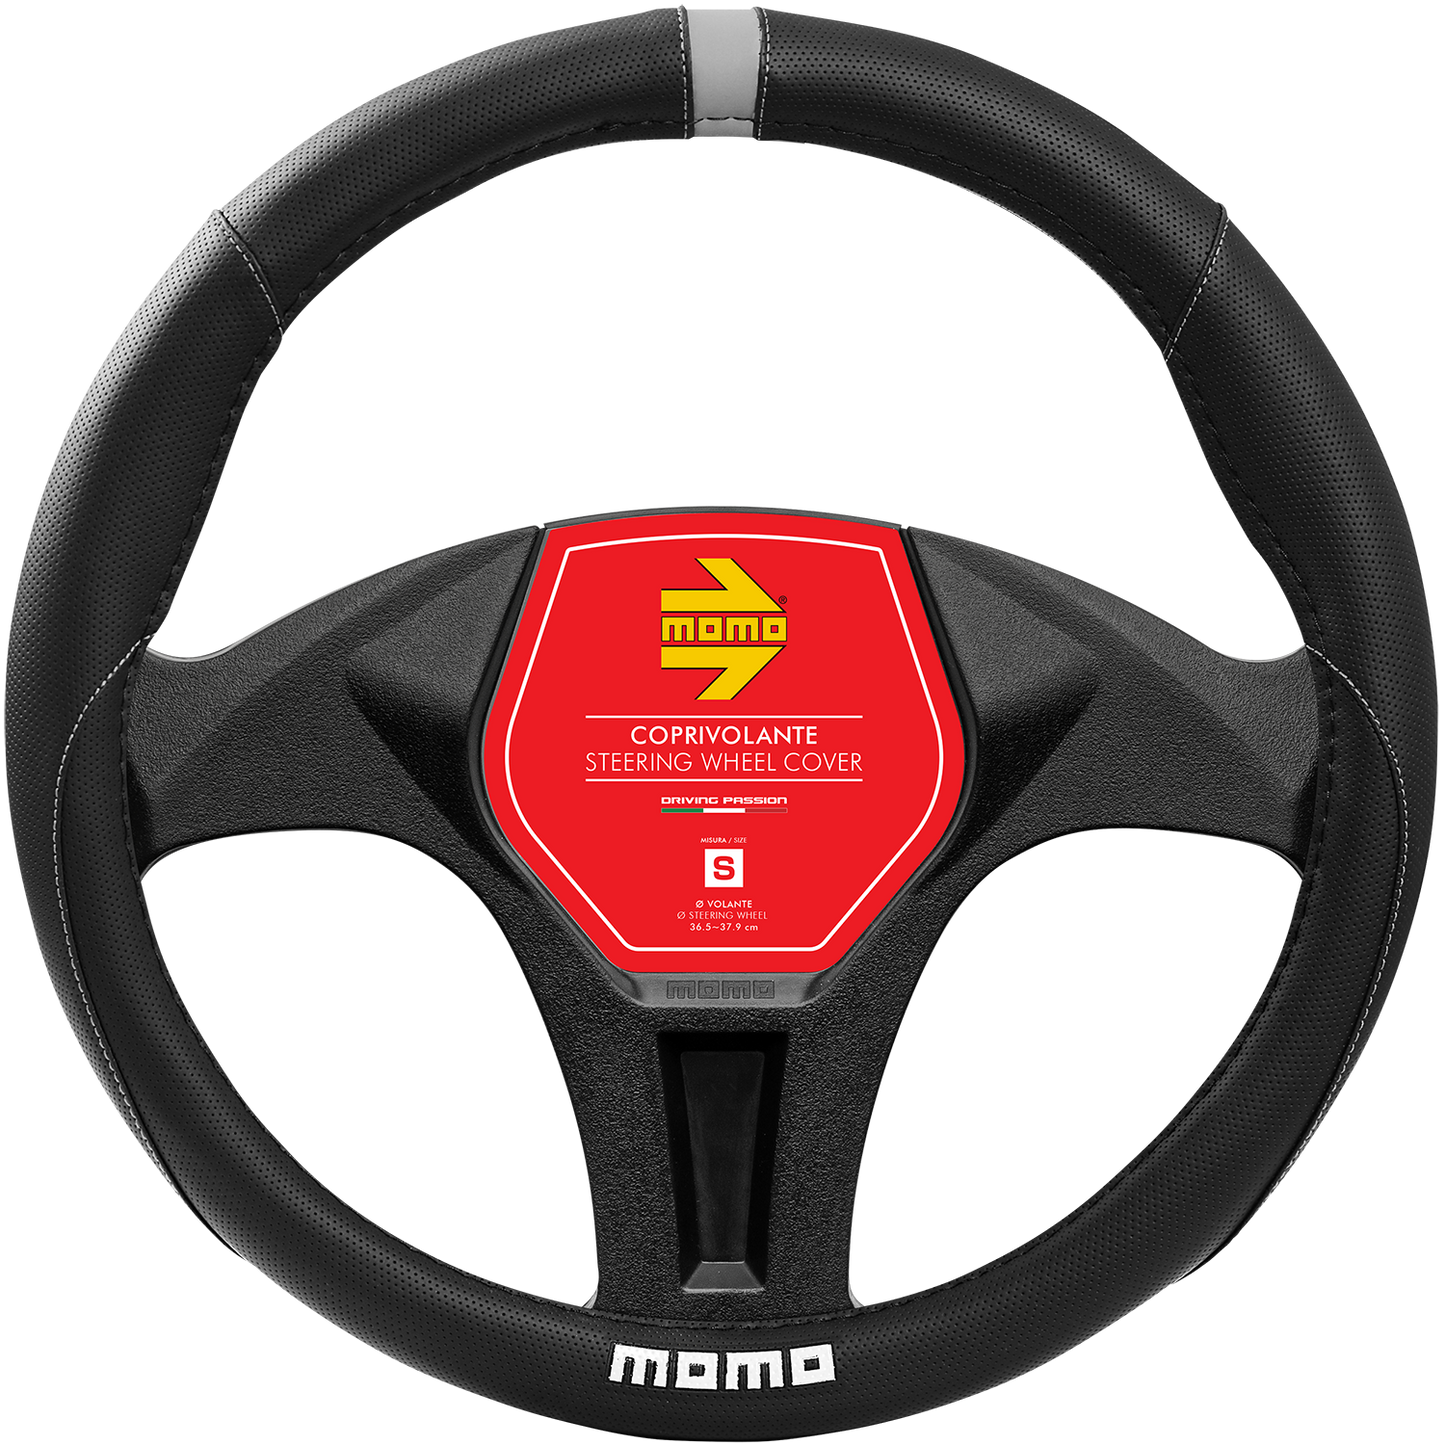 Momo Steering Wheel Cover - ELEGANT - BLACK/GREY PU - SIZE M